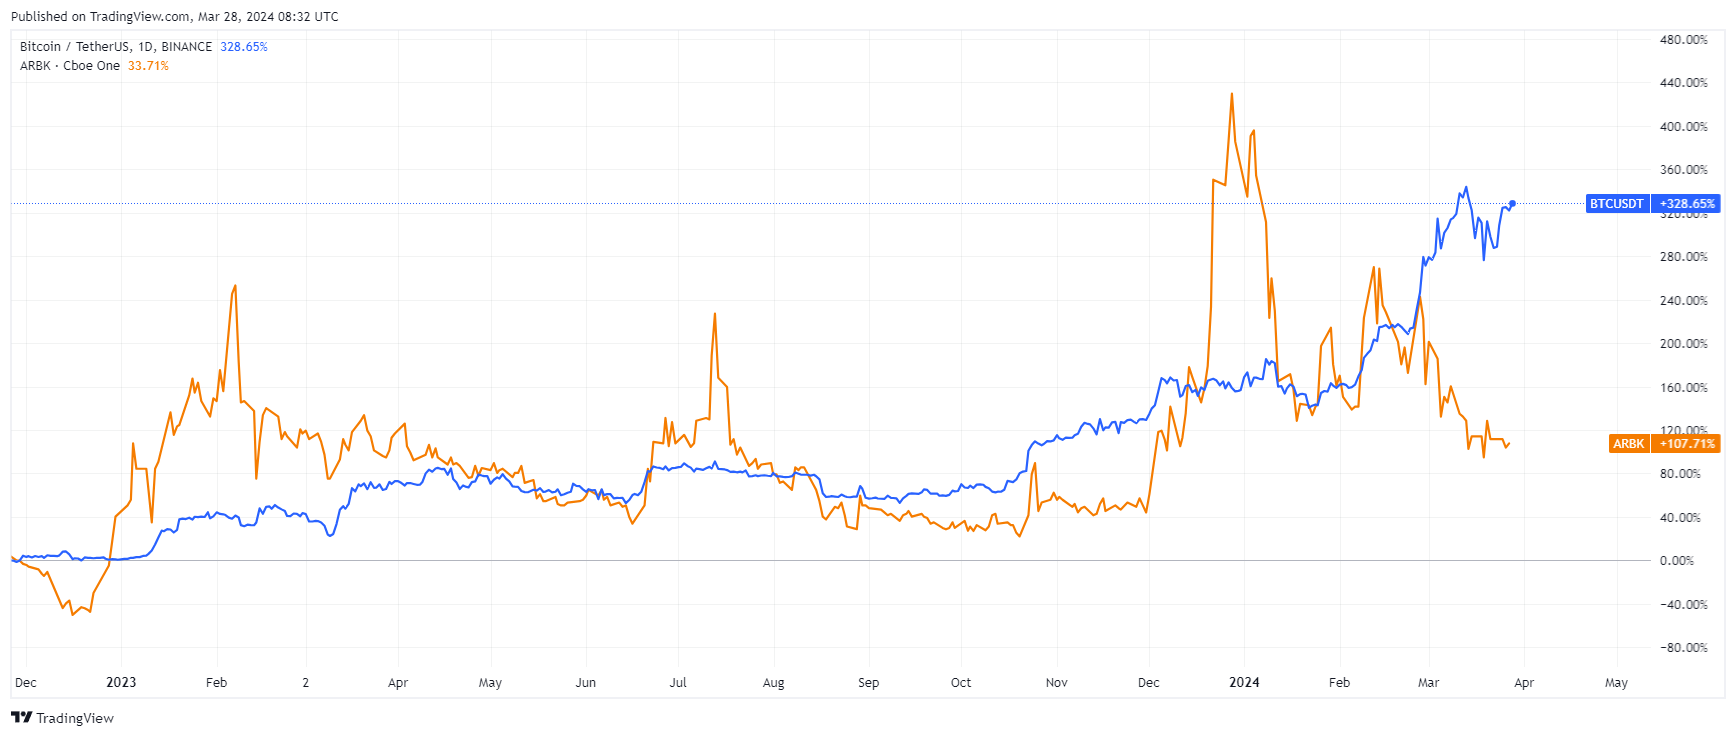 Bitcoin price (blue) goes up, while Argo (orange) falls. Source: Tradingview.com